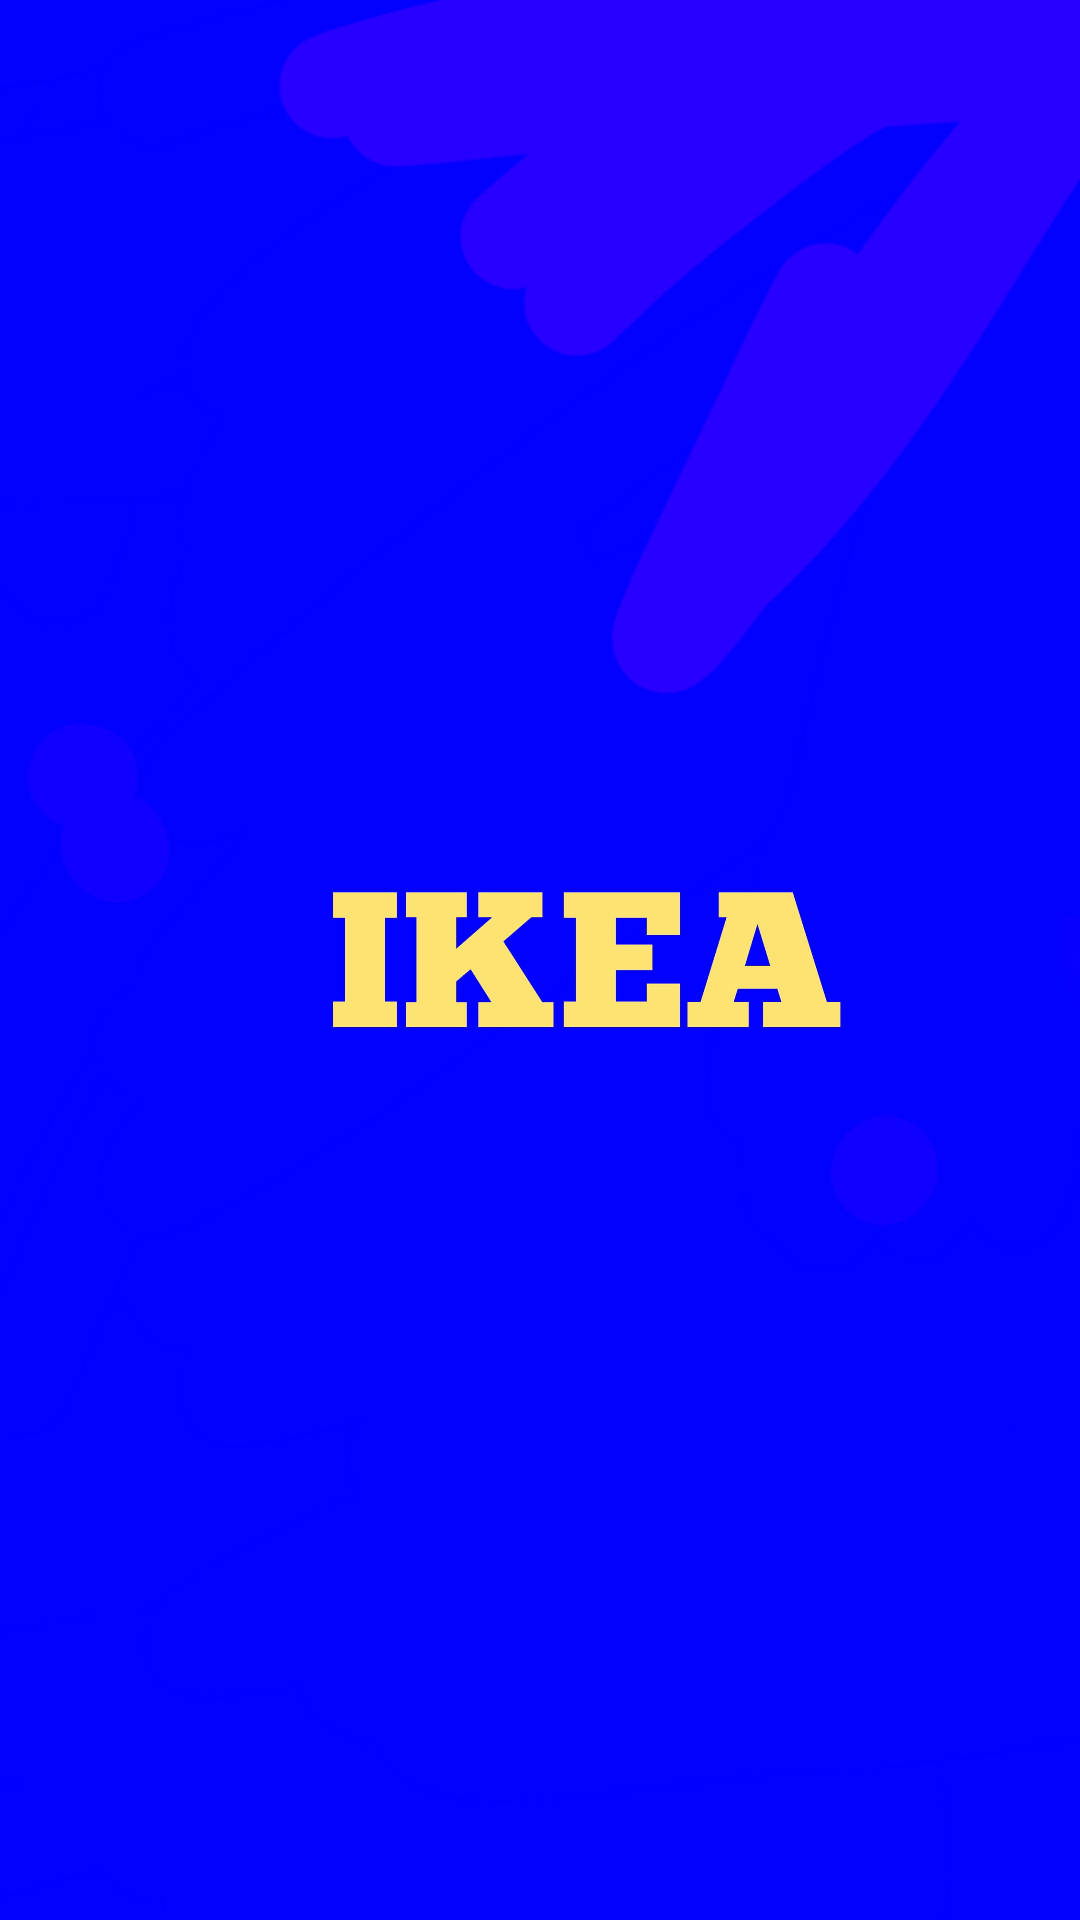 Einfachesikea-logo Blau Wallpaper